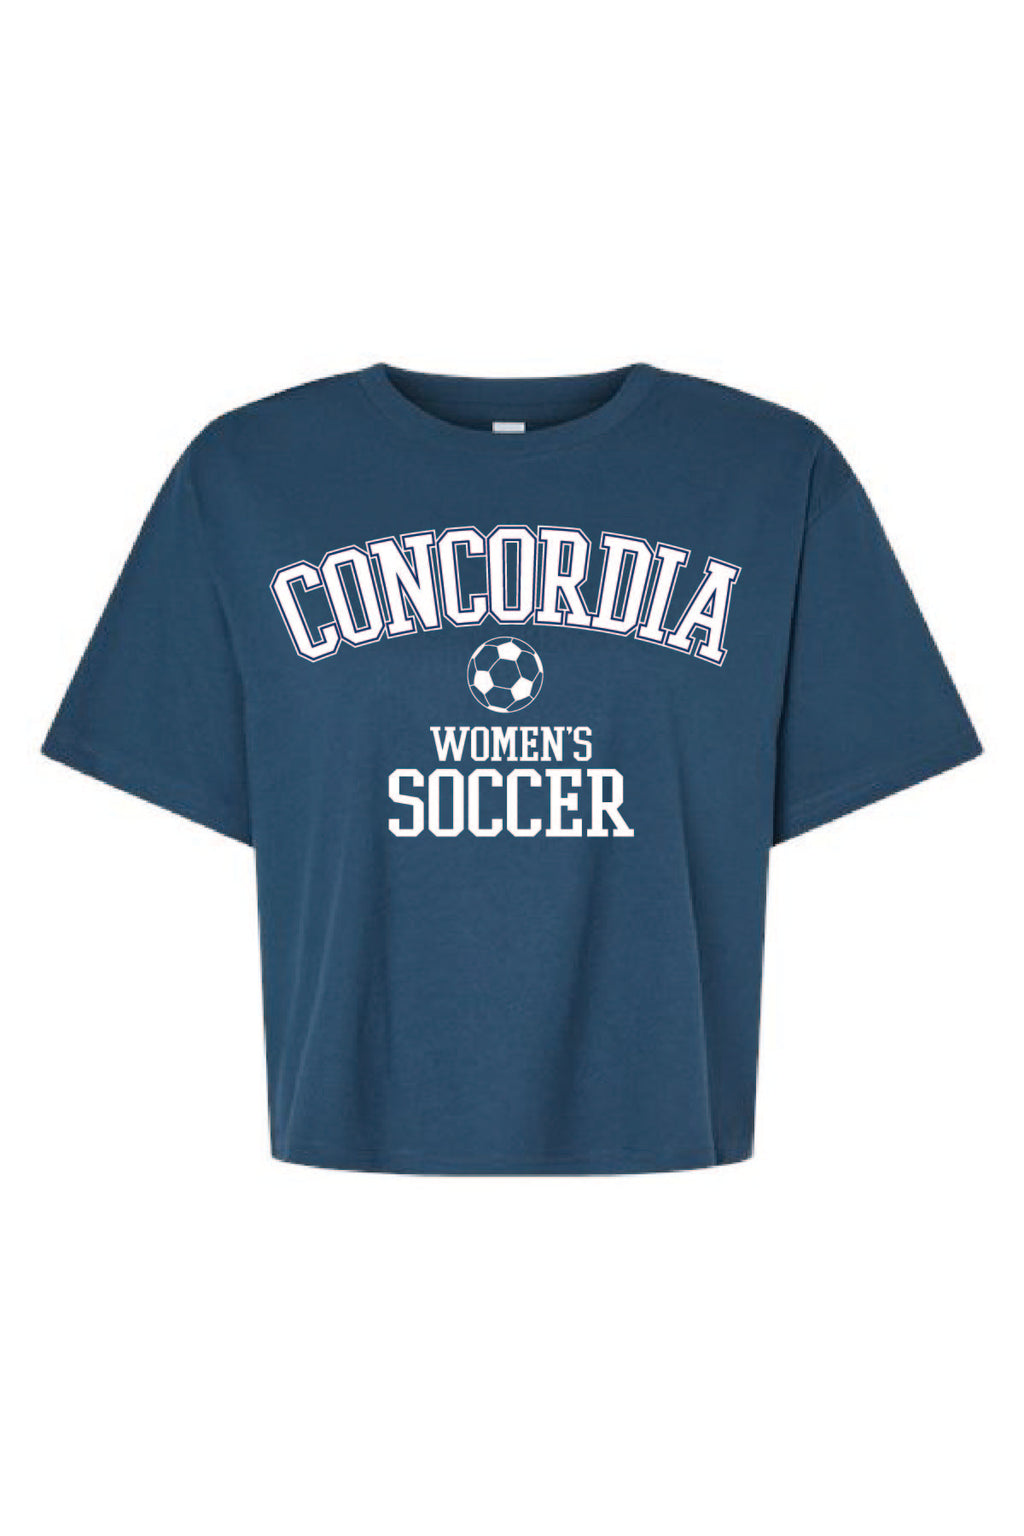 Concordia Soccer Arch - Crop T-shirt (102)